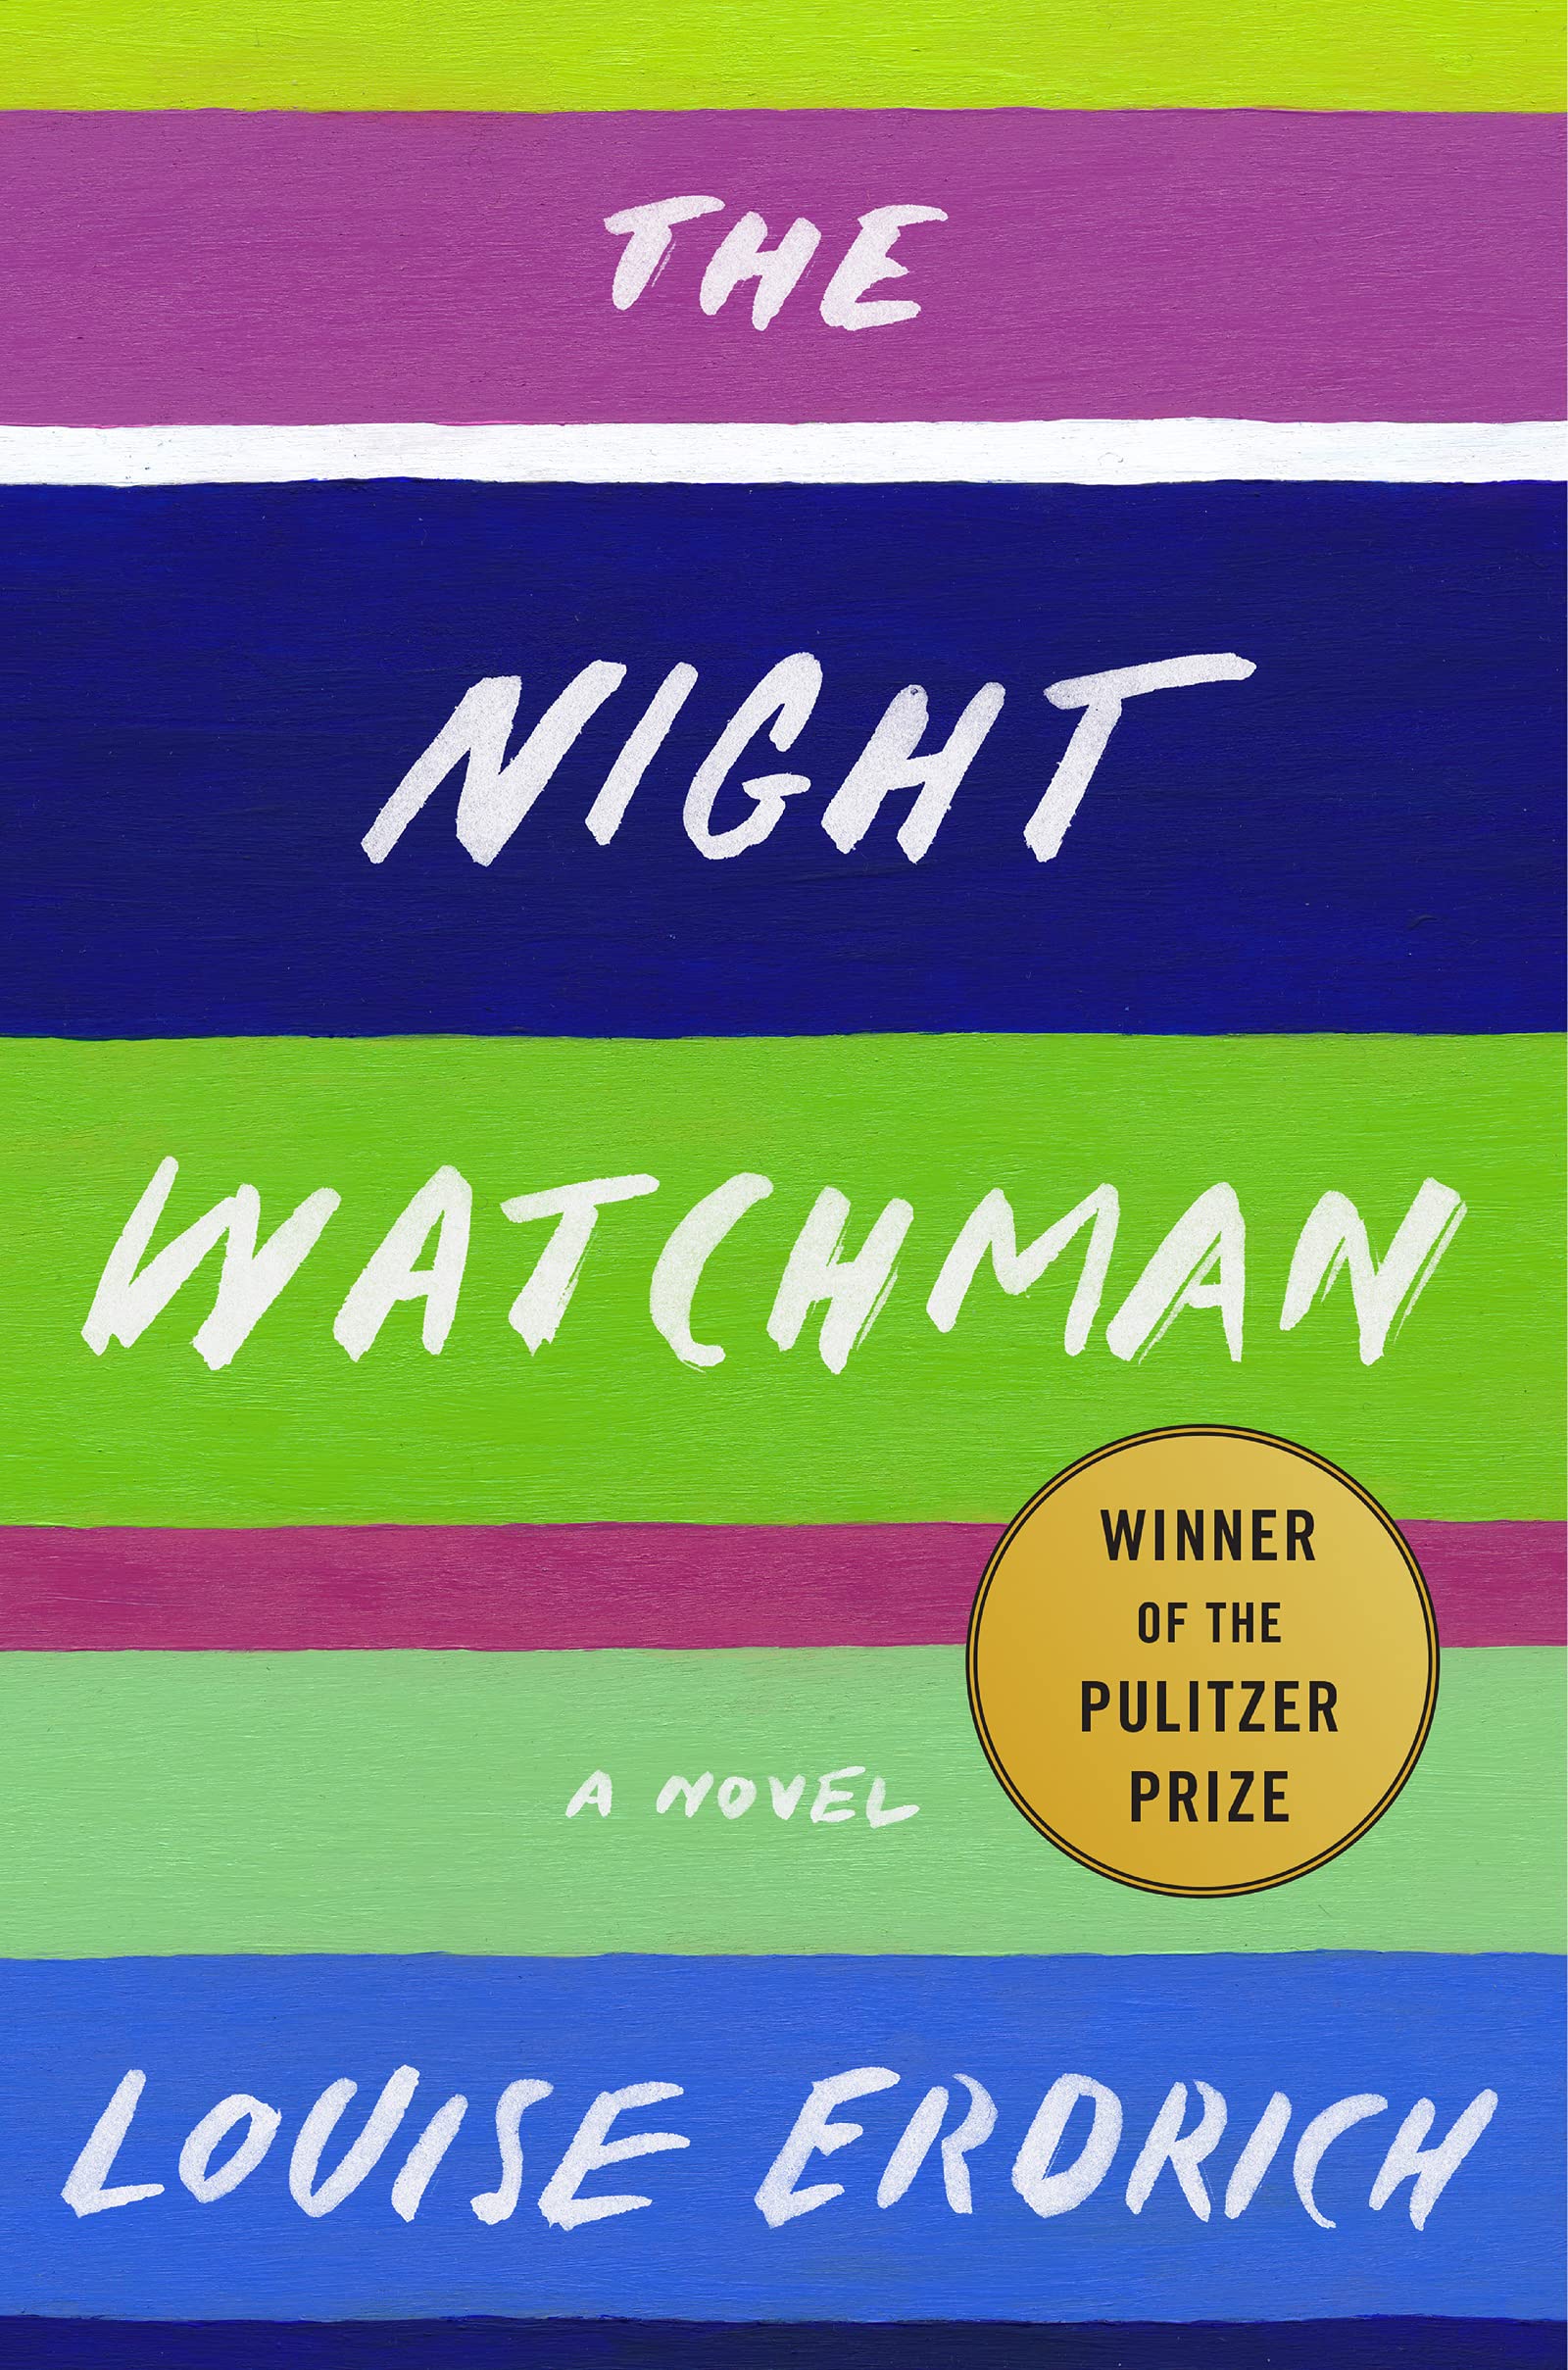 The Night Watchman by Lois Erdrich